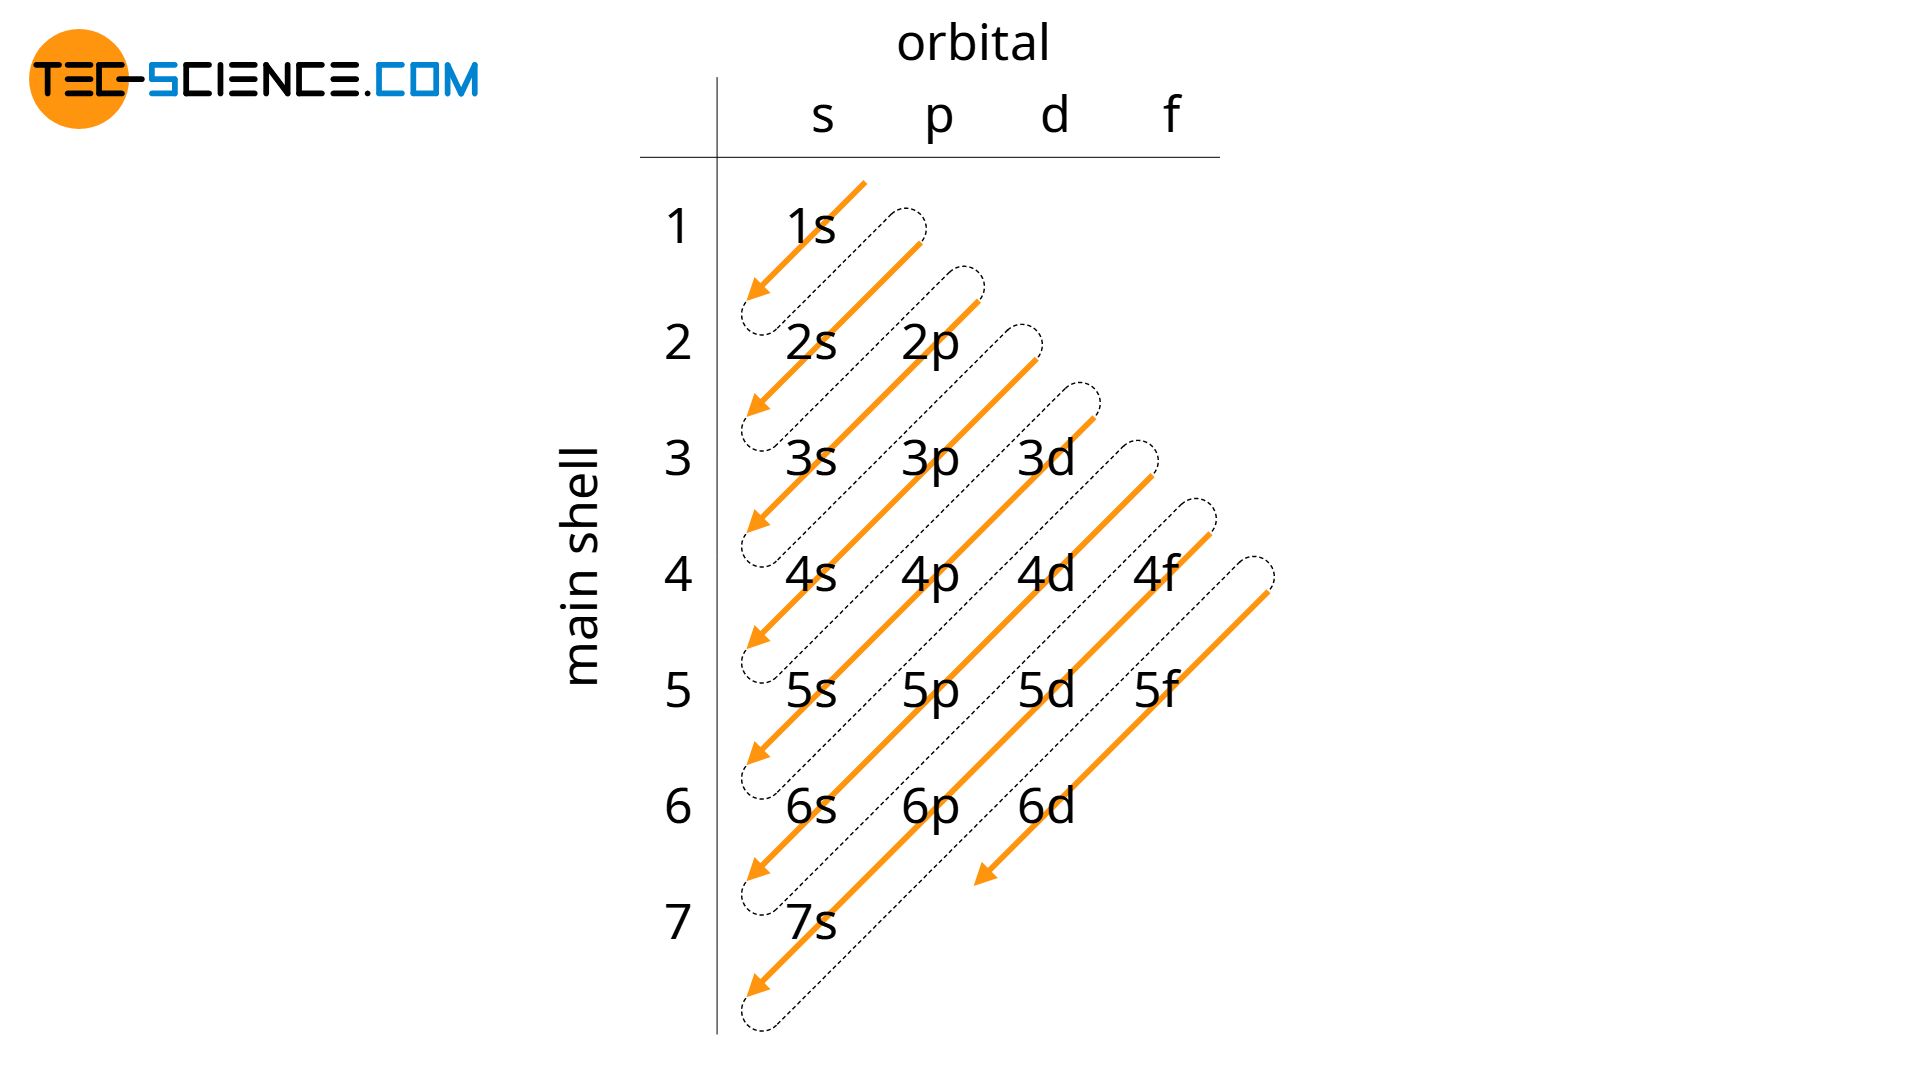 Aufbau principle (occupation order of the orbitals)